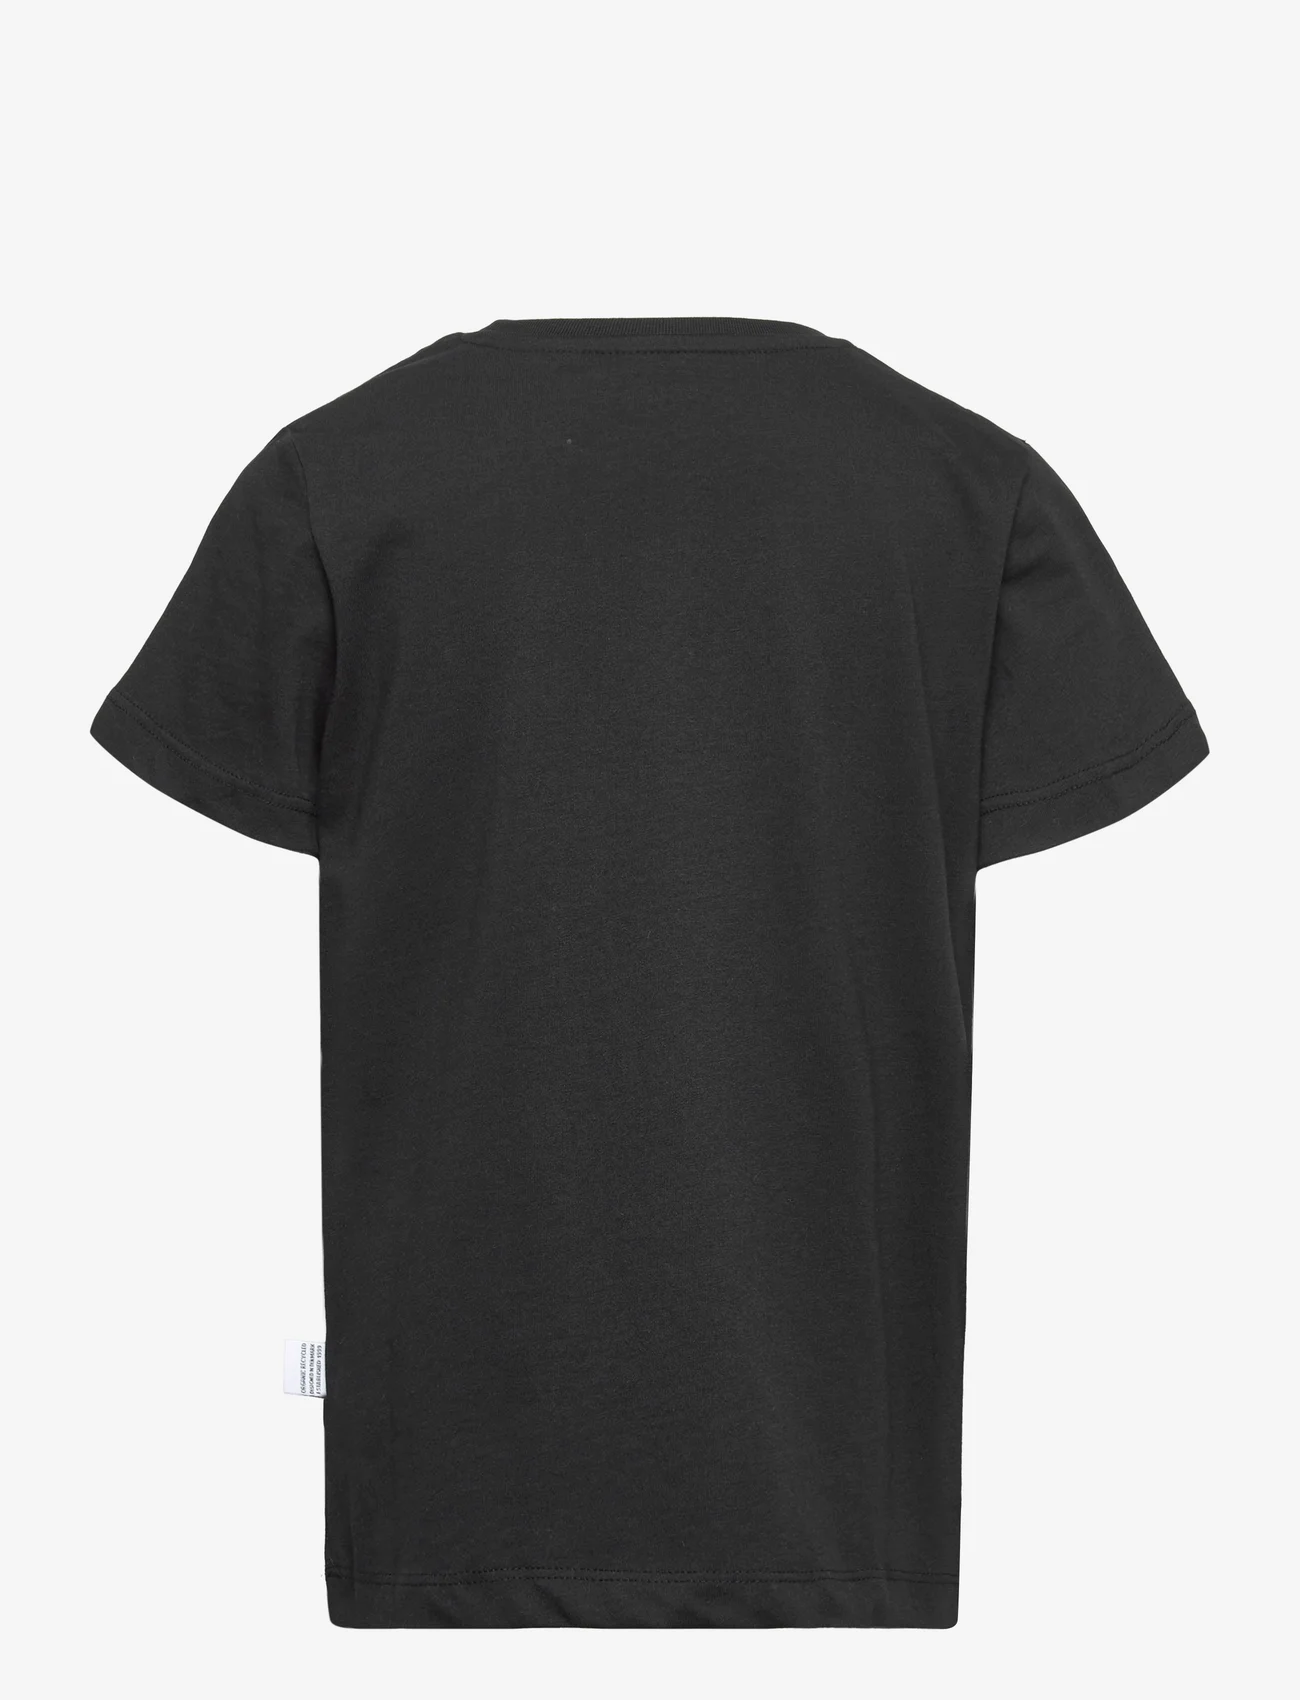 Kronstadt - Timmi Recycled - kortærmede t-shirts - black - 1